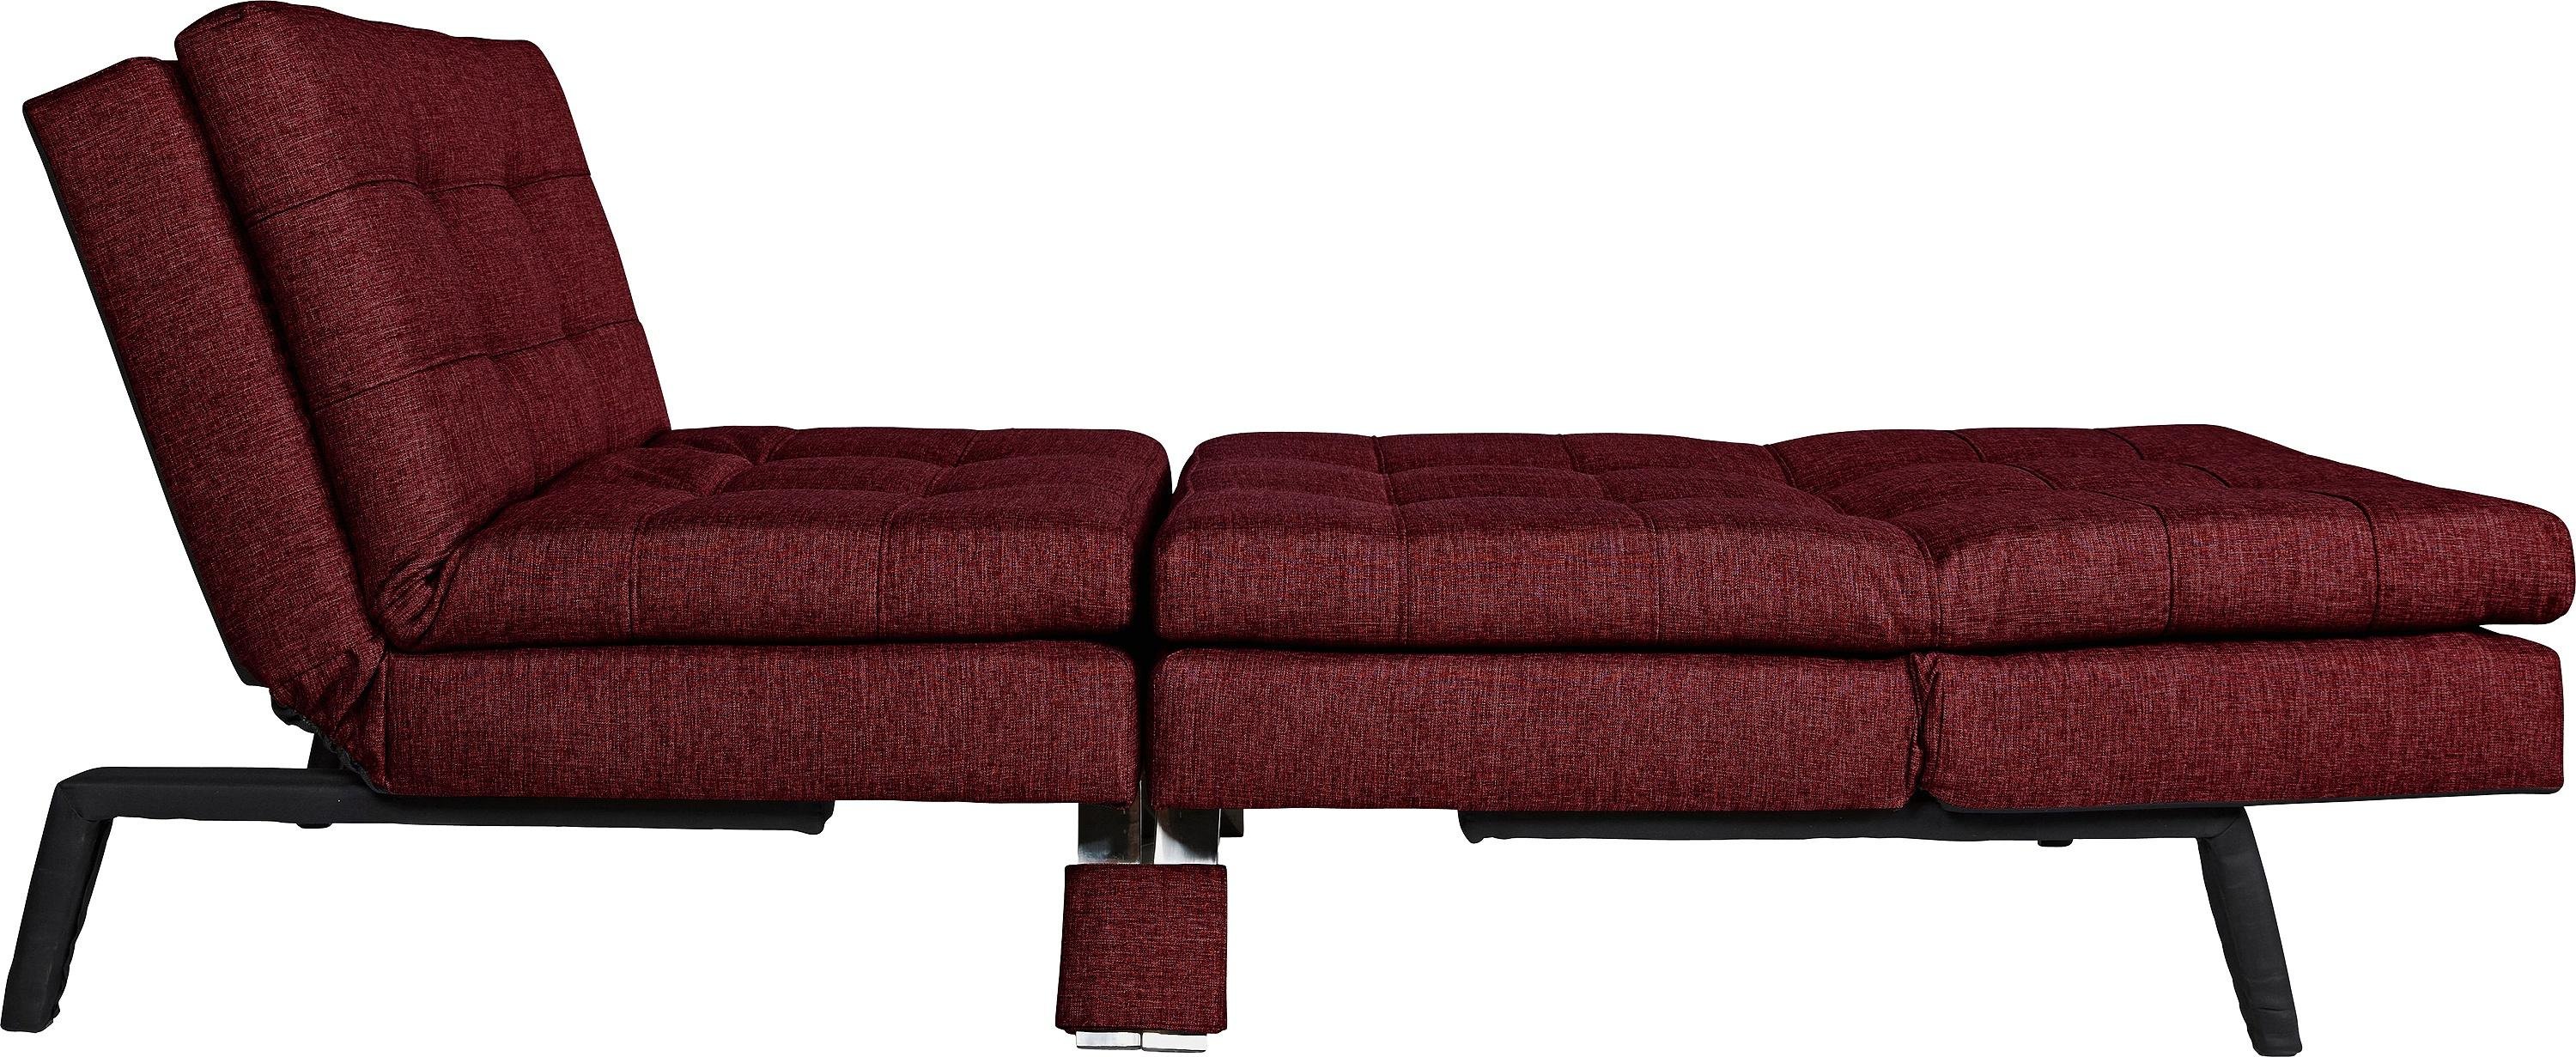 clic clac sofa bed ebay